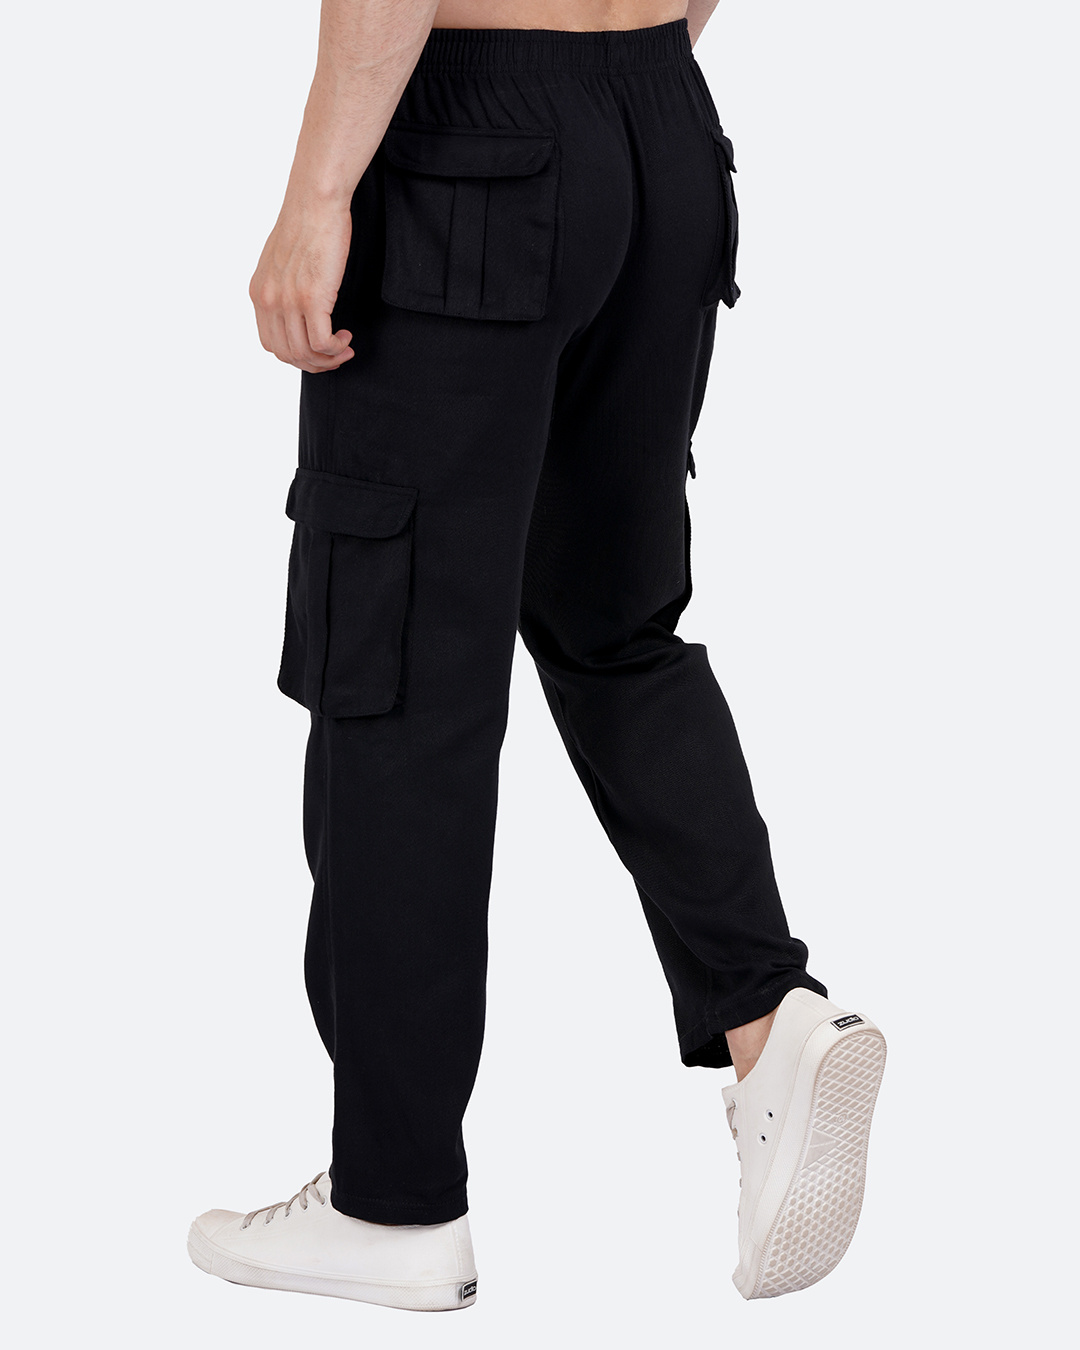 Buy Men's Black Loose Comfort Fit Cargo Track Pants Online at Bewakoof